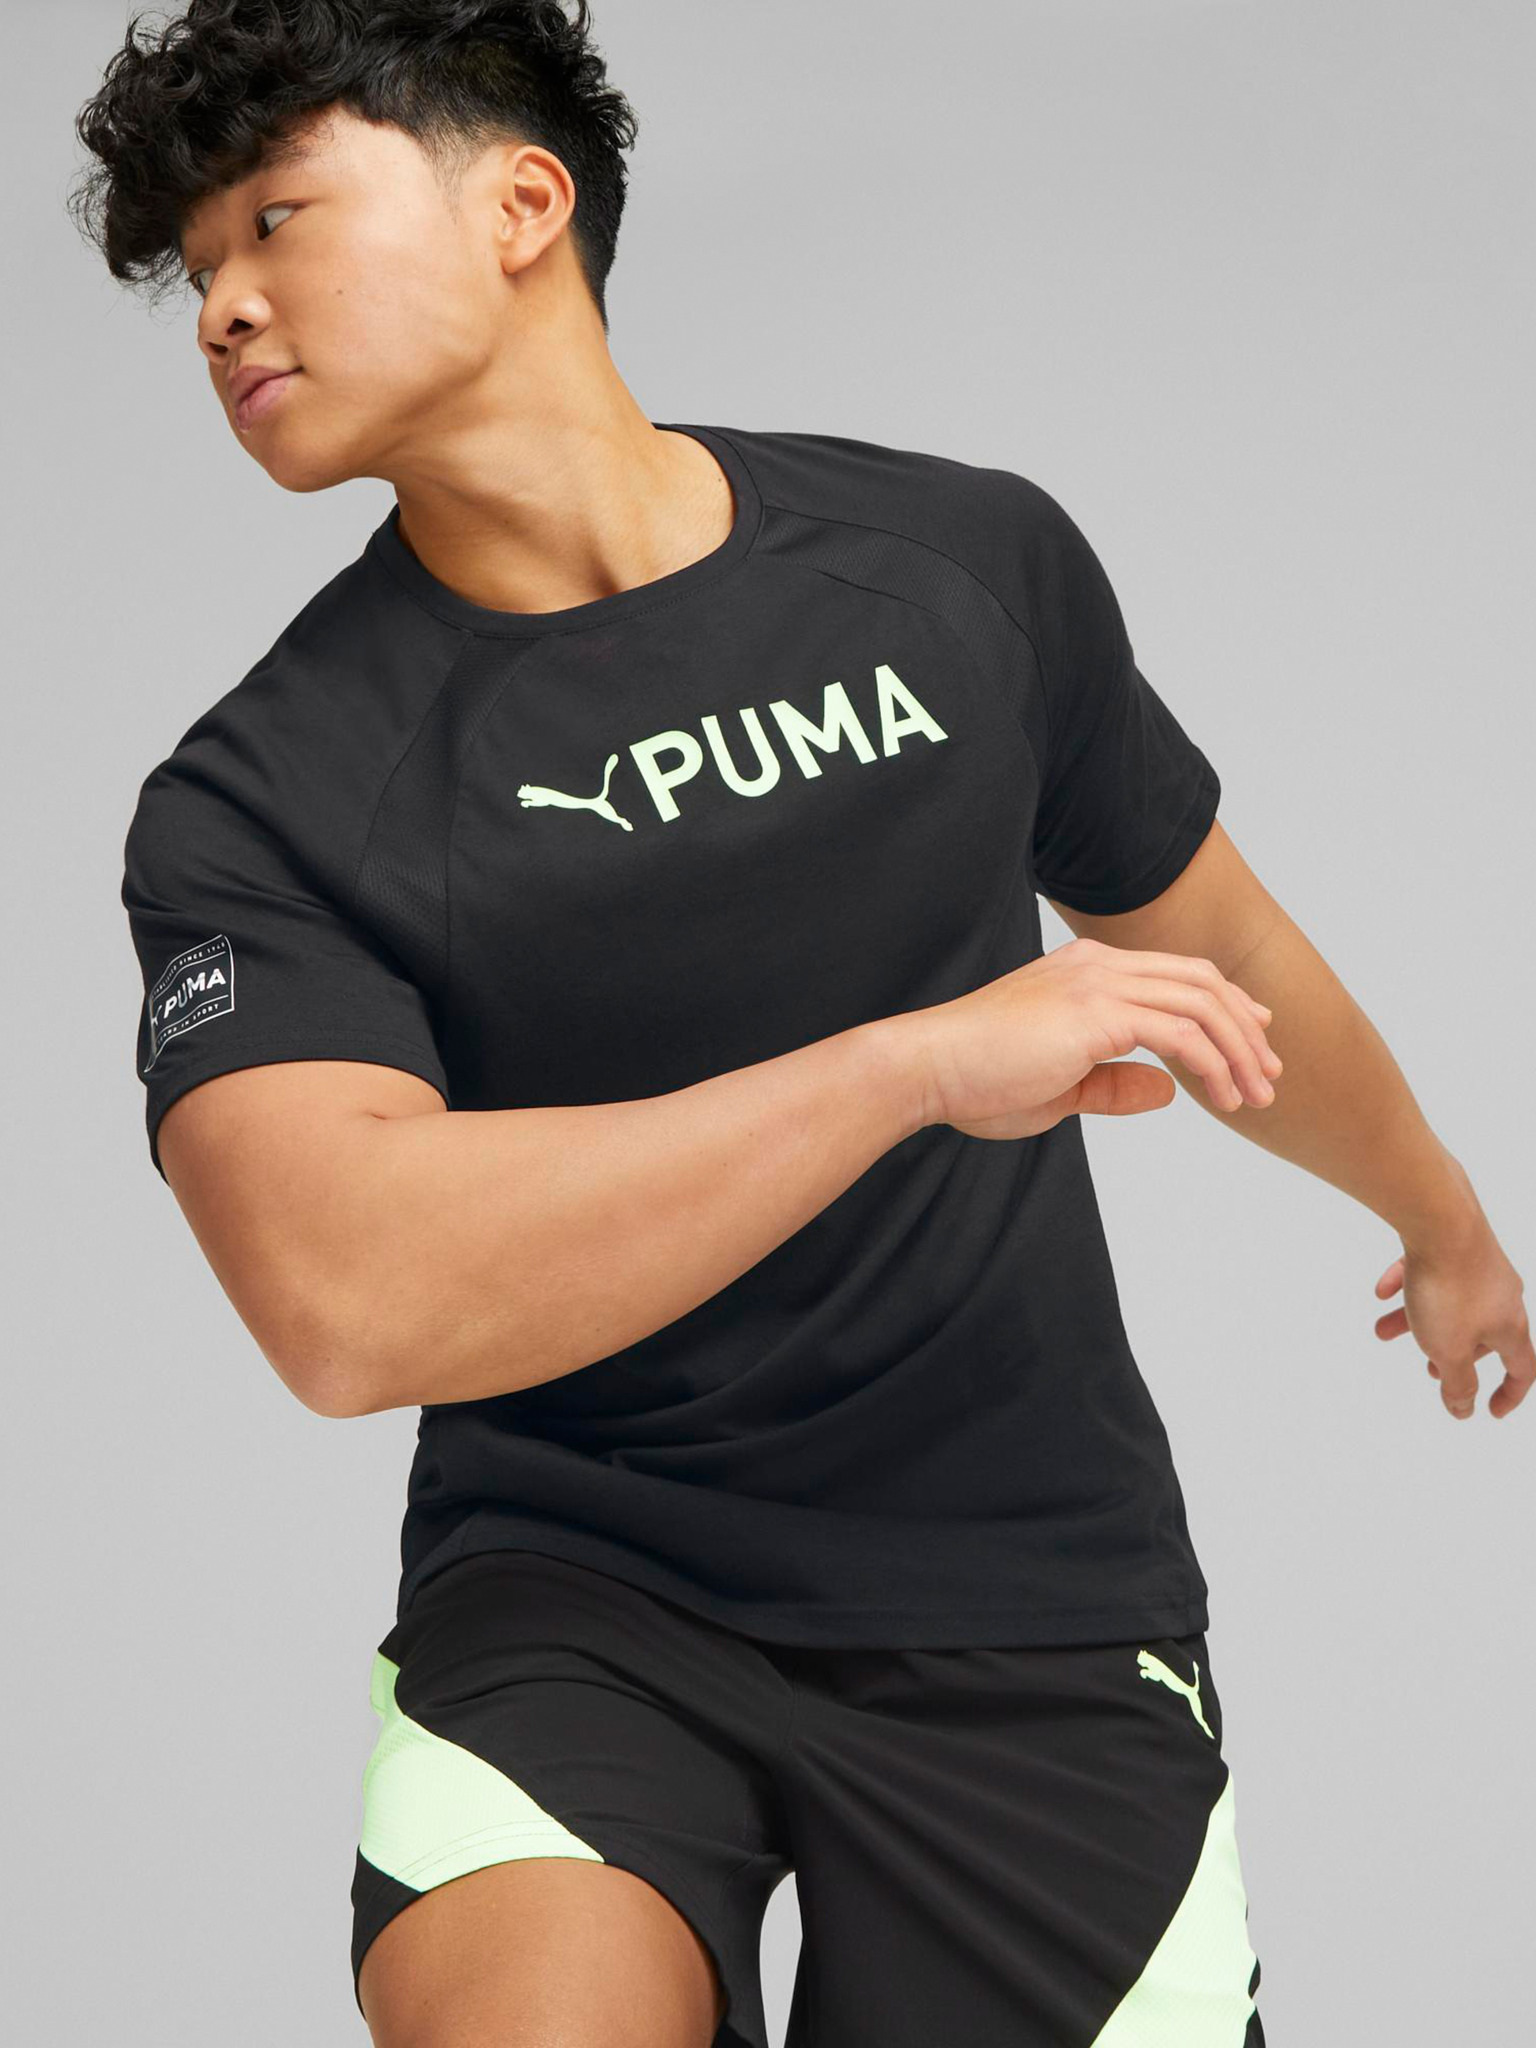 Triblend Ultrabreathe Puma T-shirt Fit -